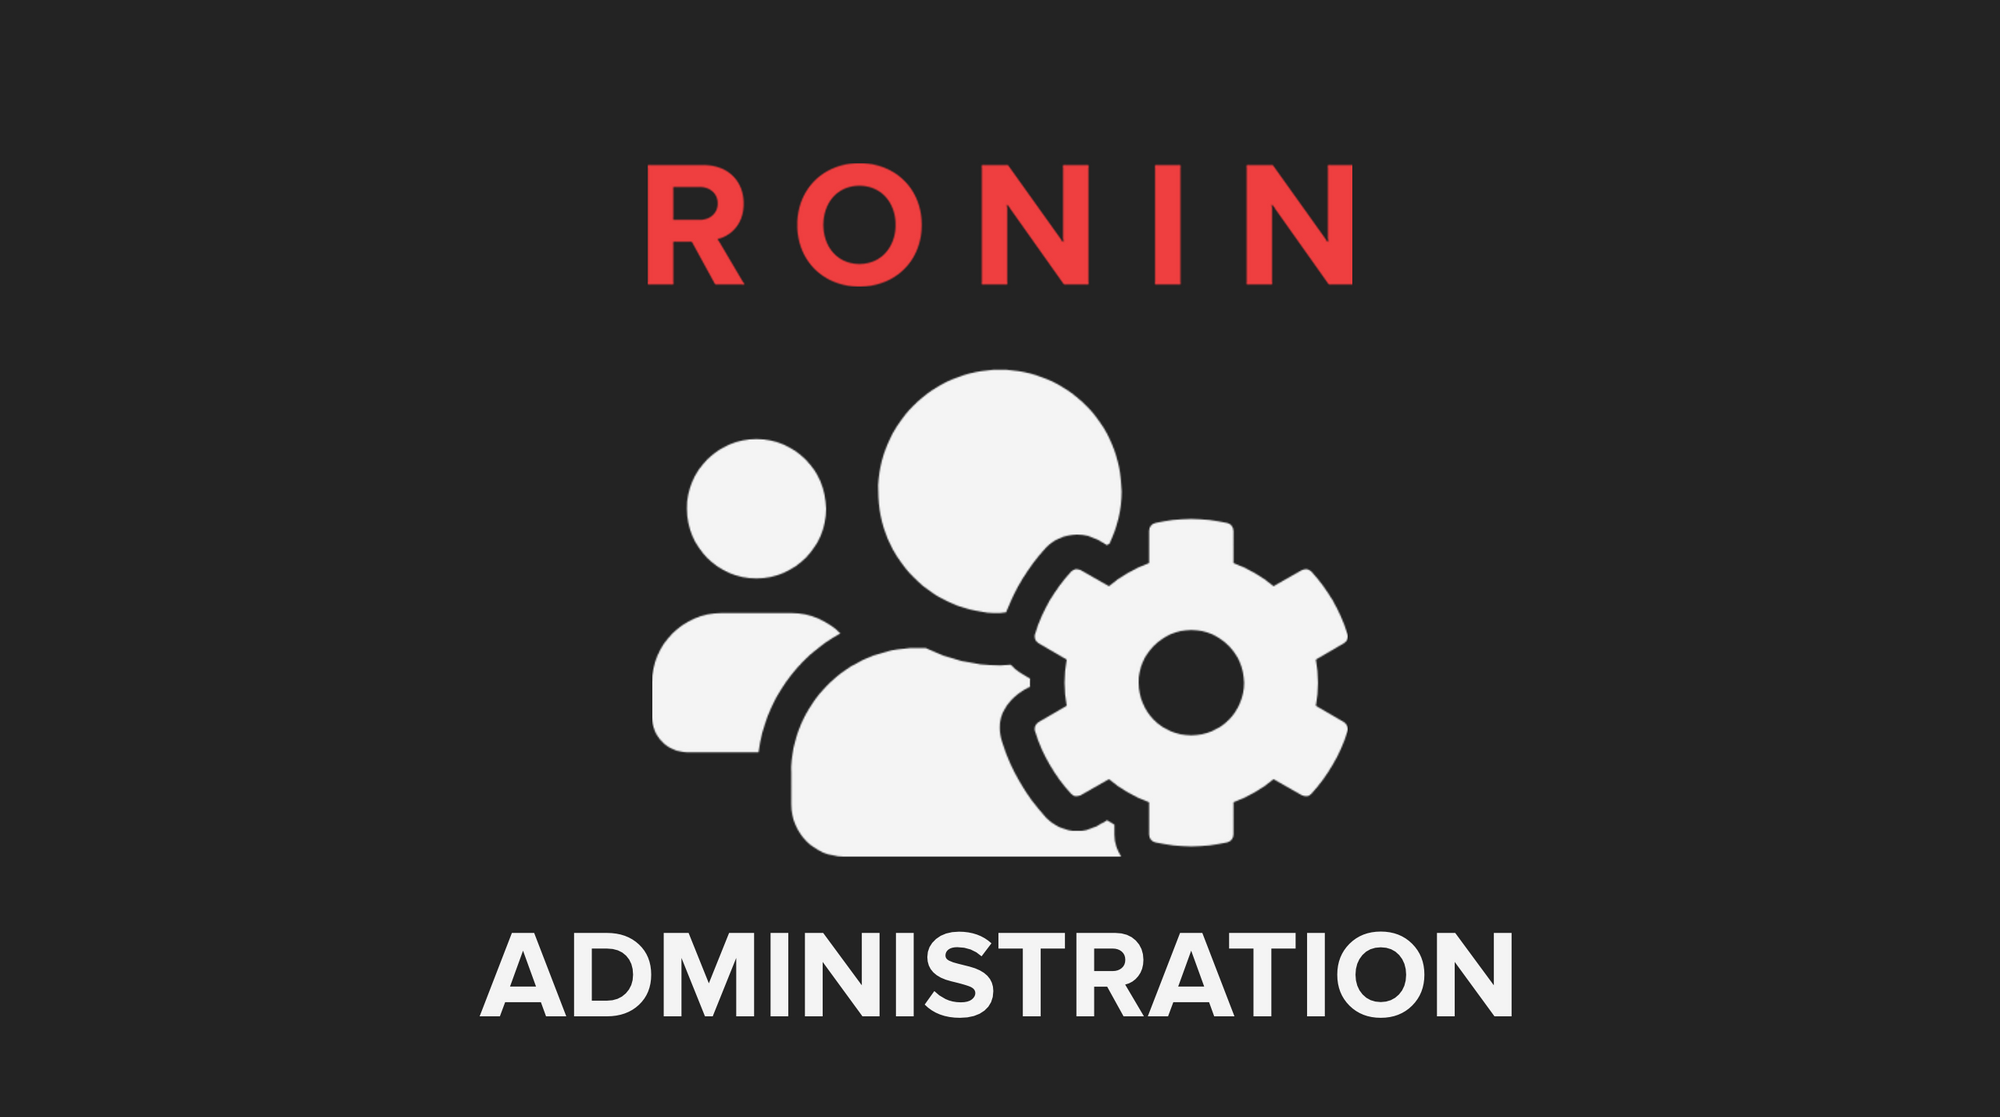 RONIN Administration